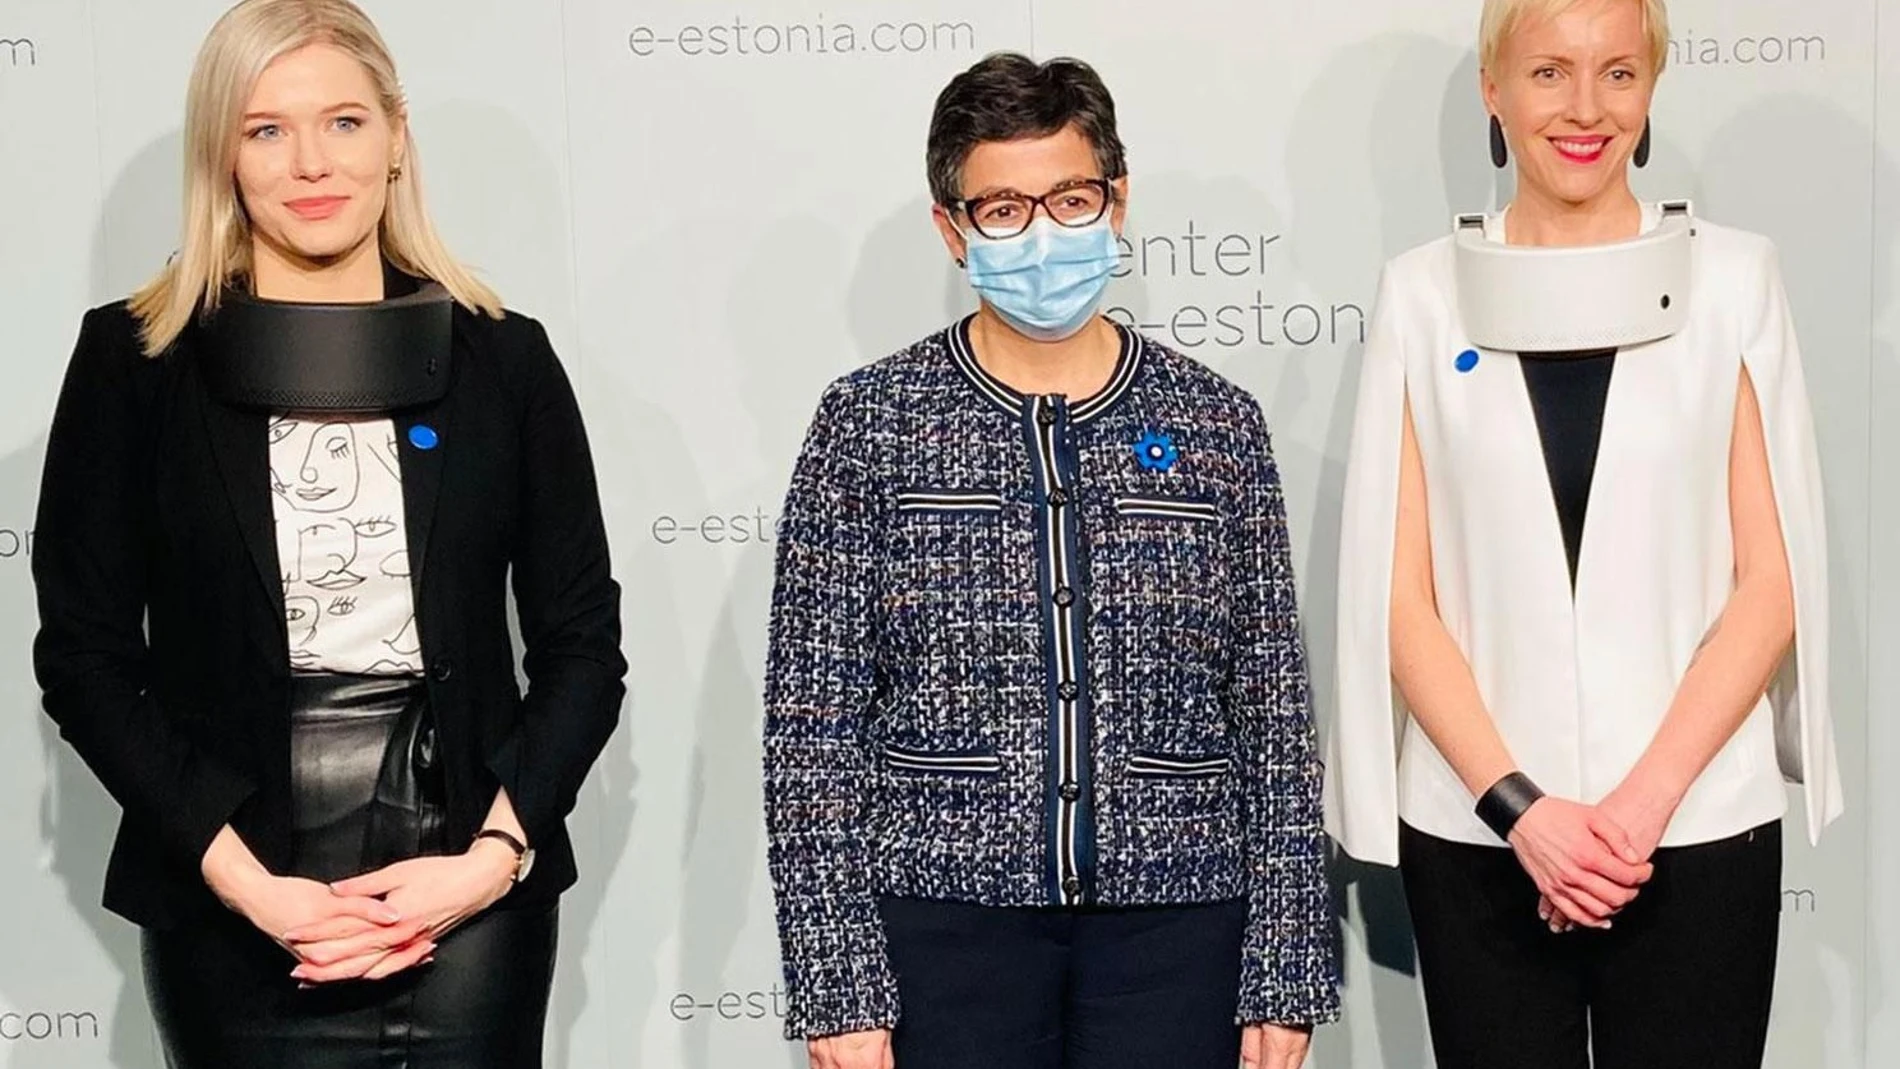 La ministra de Exteriores, González Laya, posa junto a dos trabajadoras de un centro de investigación tecnológica de Tallin (Estonia)